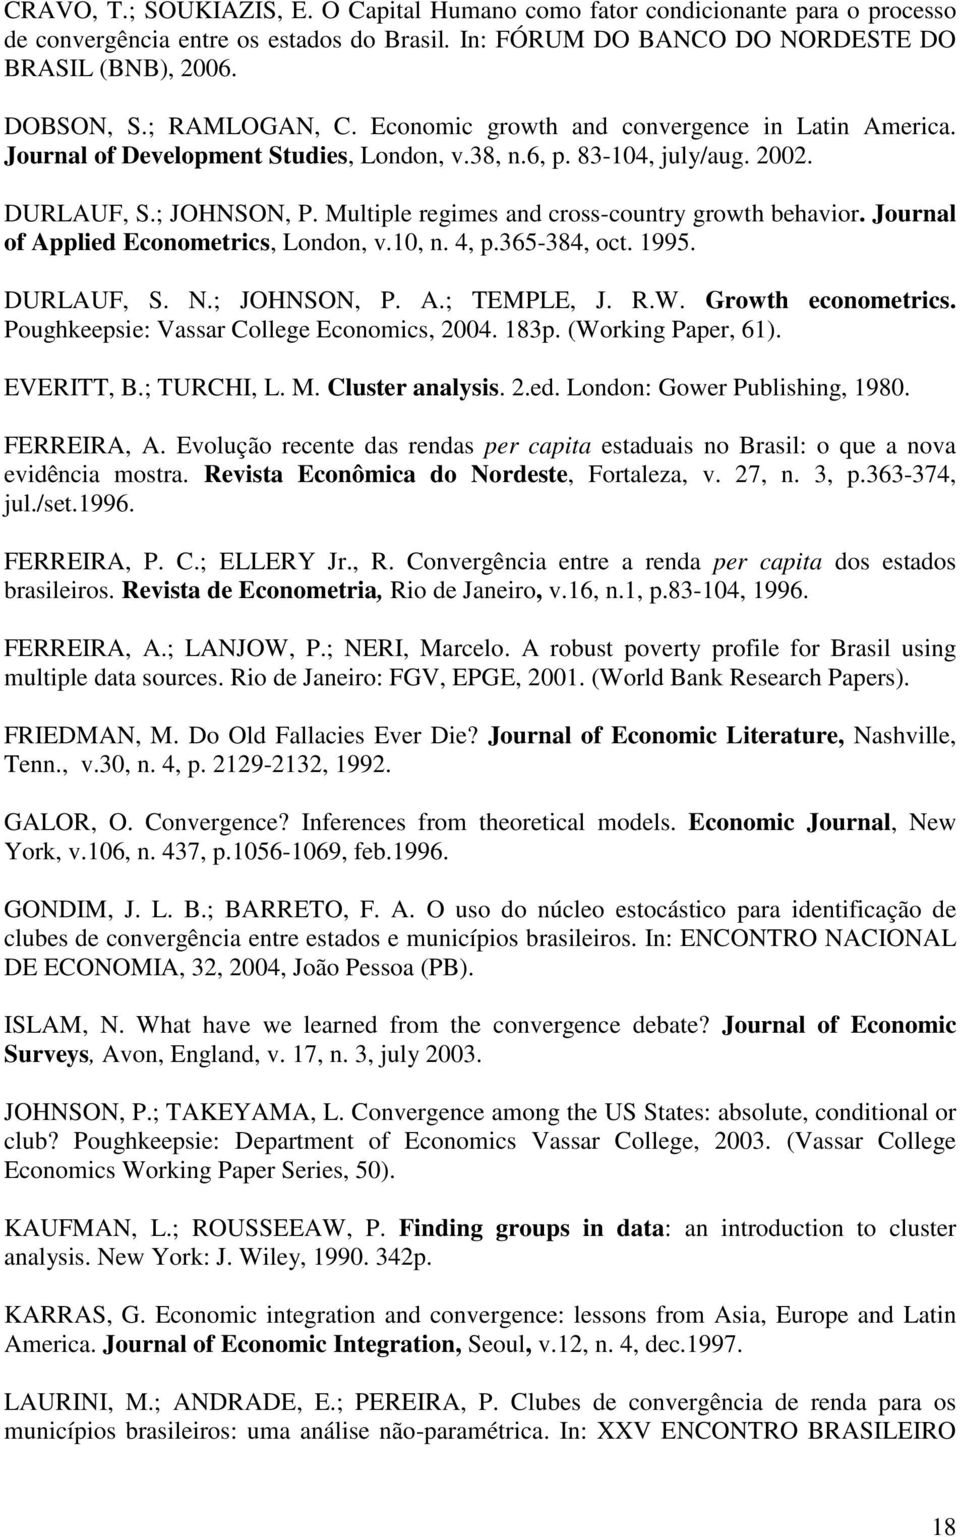 Journal of Applied Economerics, London, v.10, n. 4, p.365-384, oc. 1995. DURLAUF, S. N.; JOHNSON, P. A.; TEMPLE, J. R.W. Growh economerics. Poughkeepsie: Vassar College Economics, 2004. 183p.